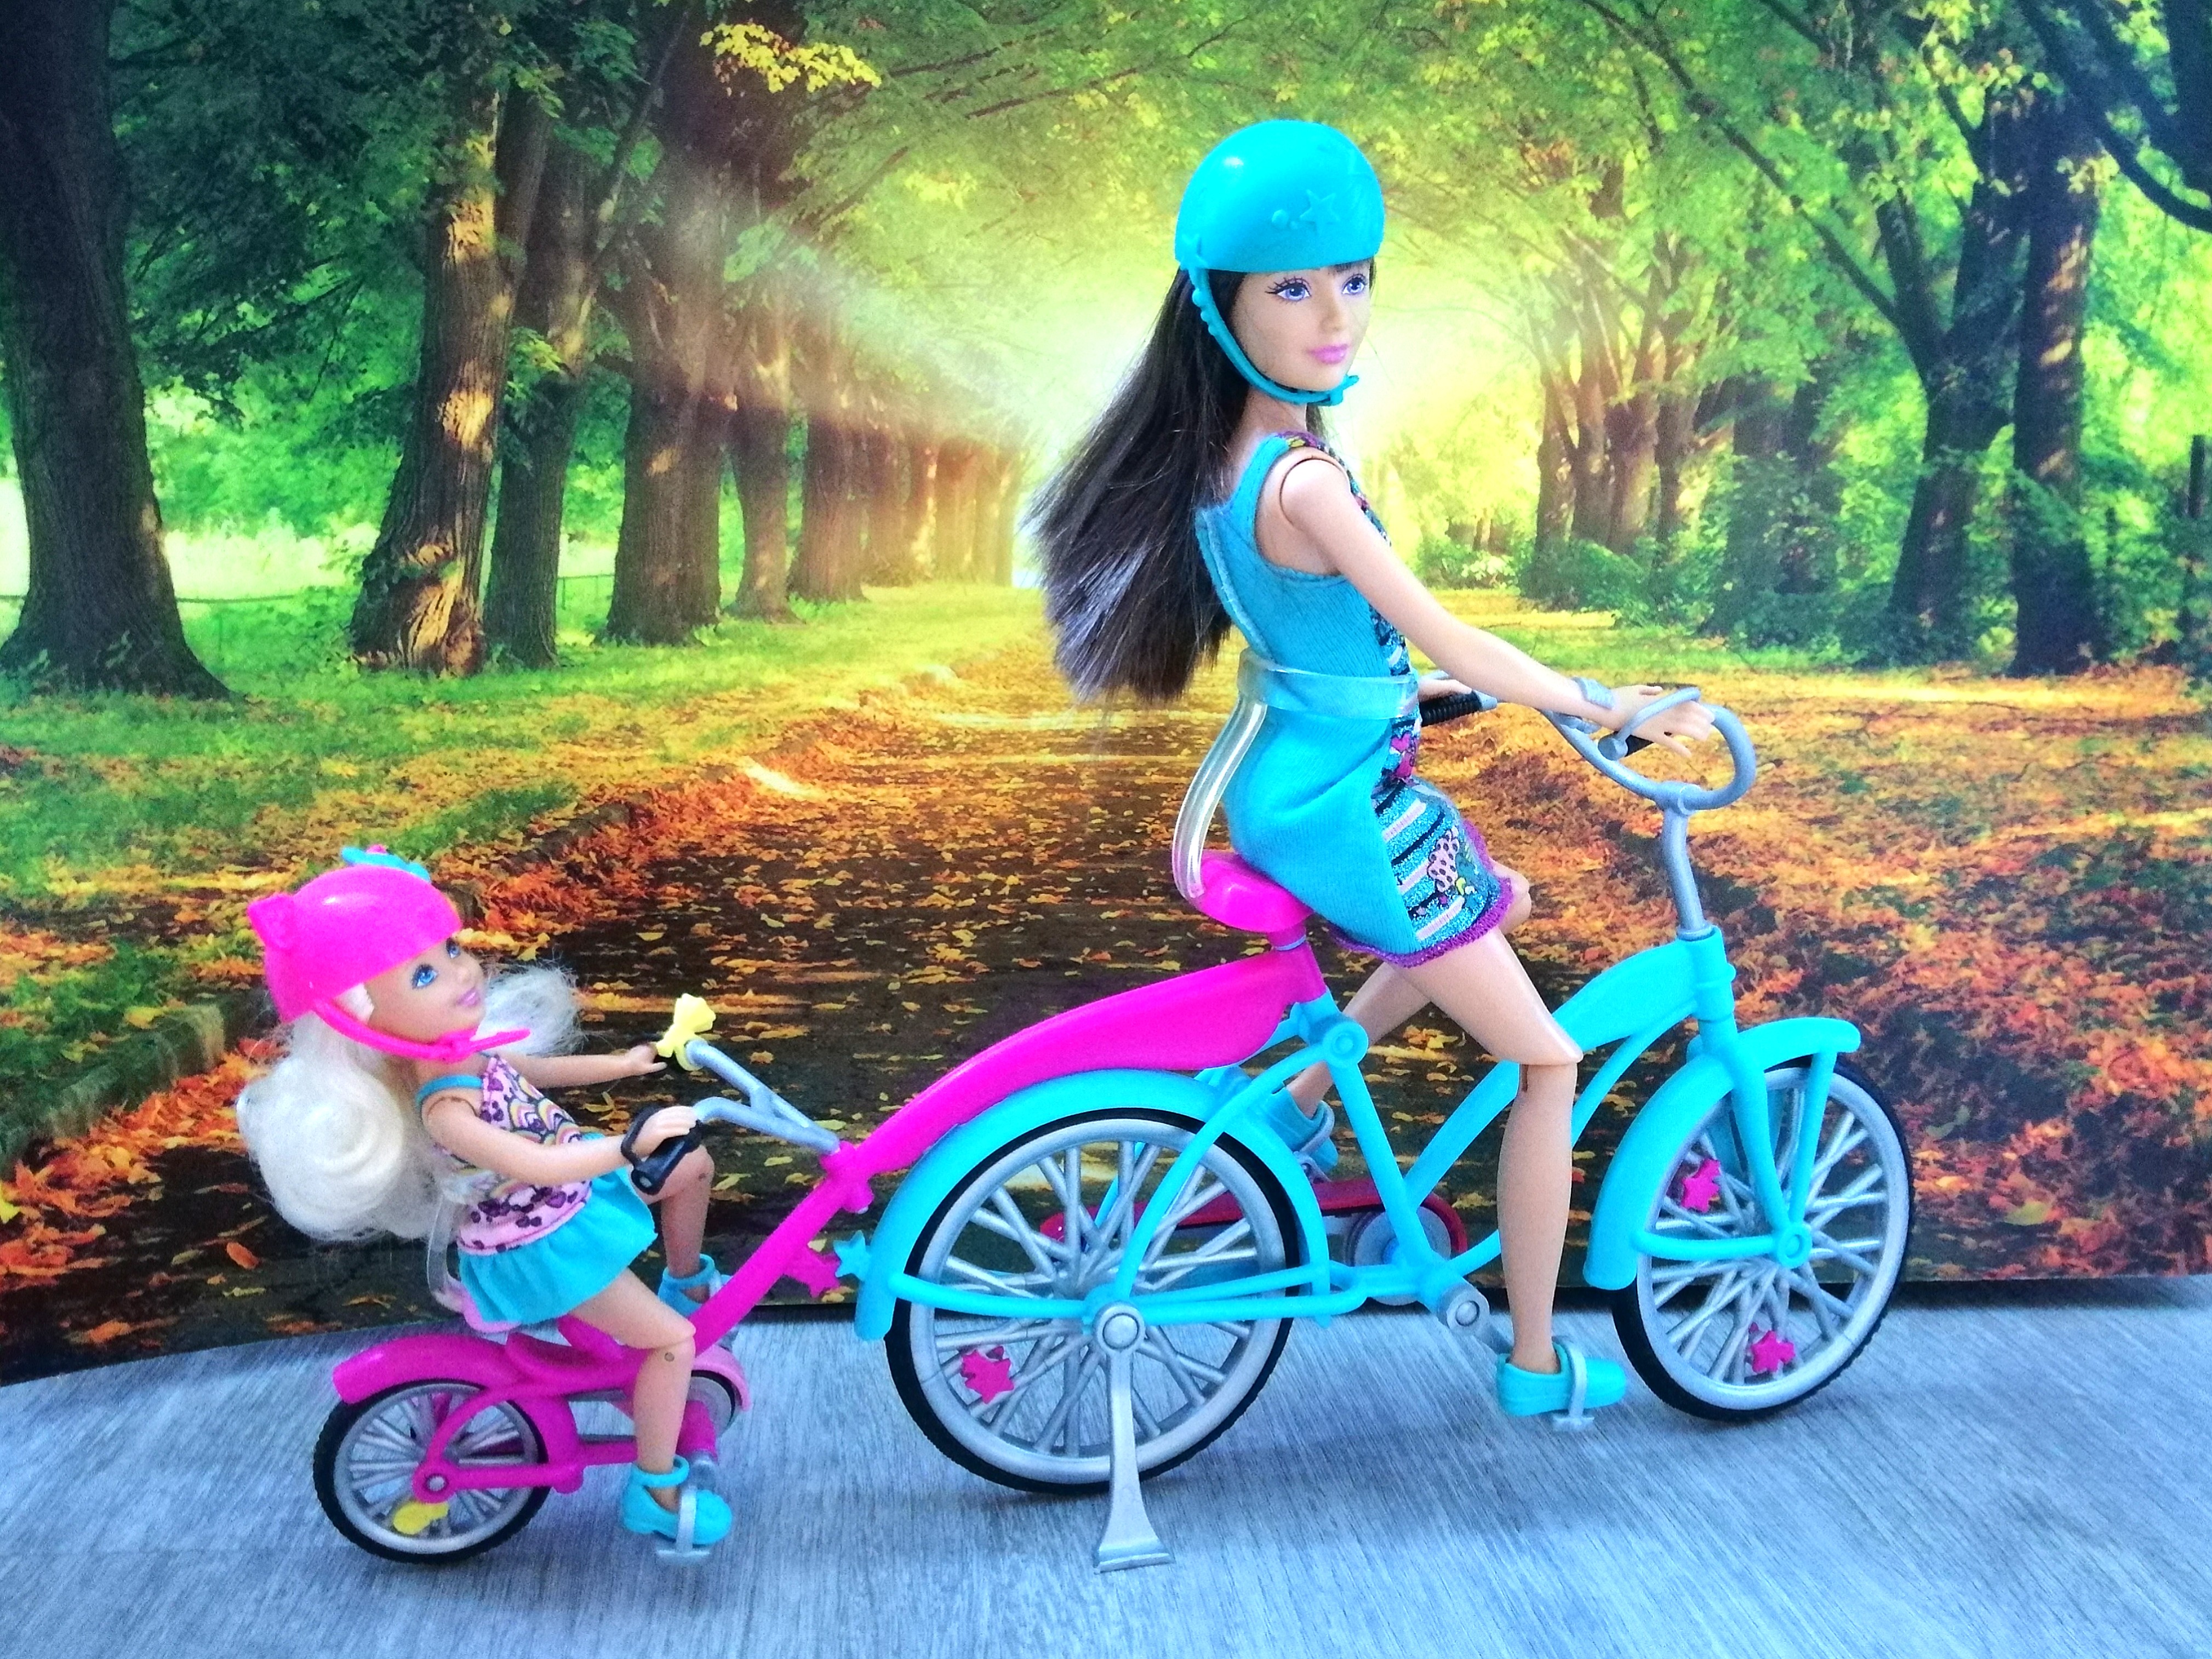 My sister bikes. Барби на велосипеде. Велосипед Барби розовый.